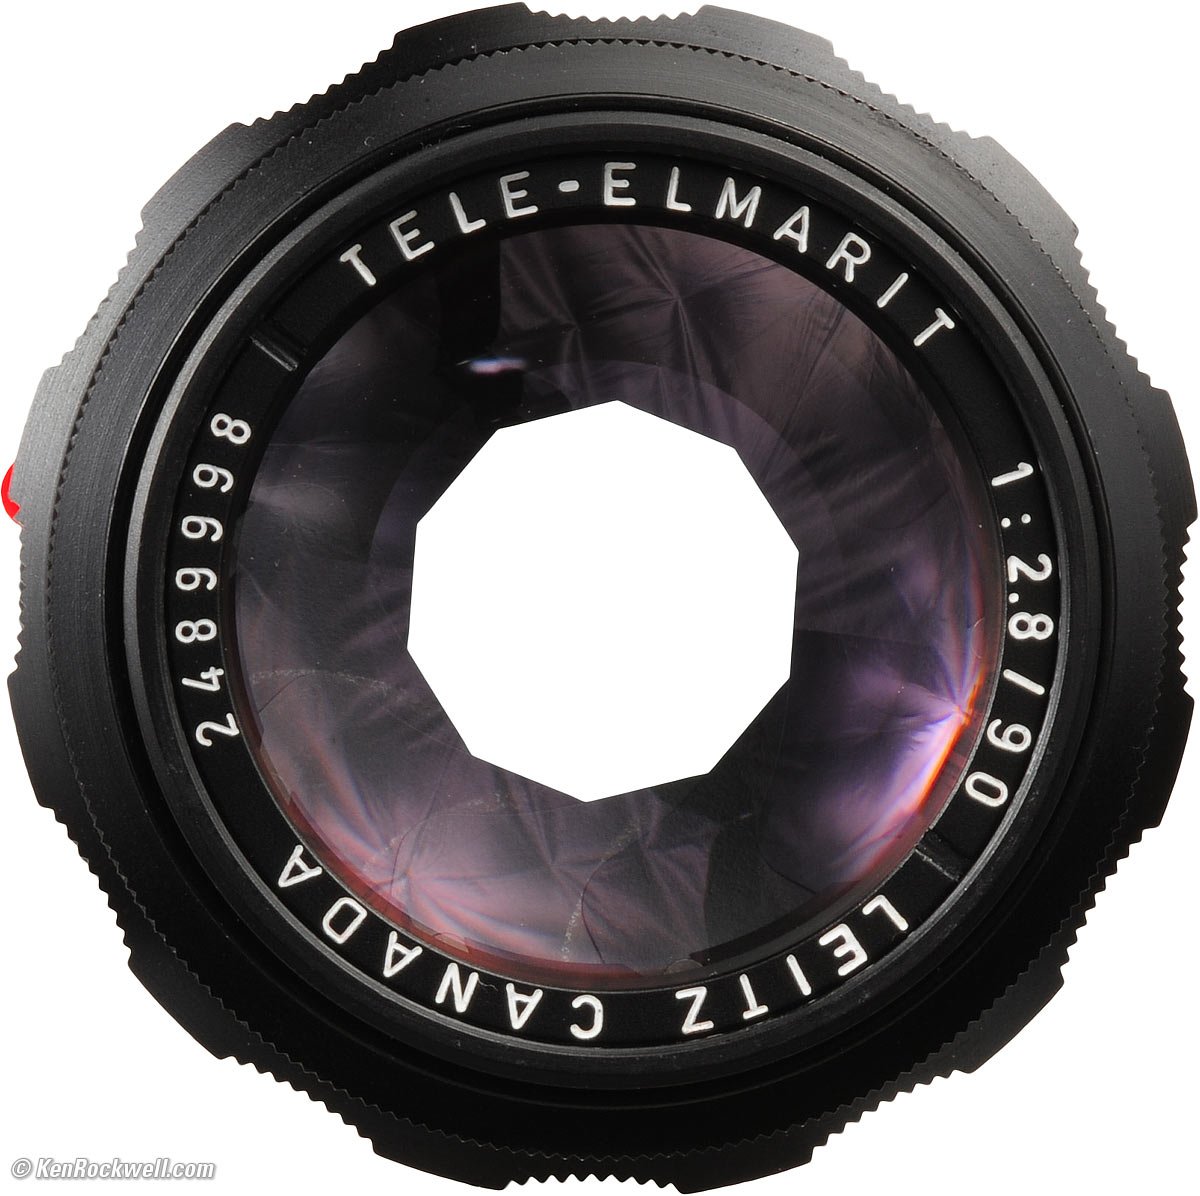 LEICA TELE-ELMARIT 90mm f/2.8 (1964-1974)